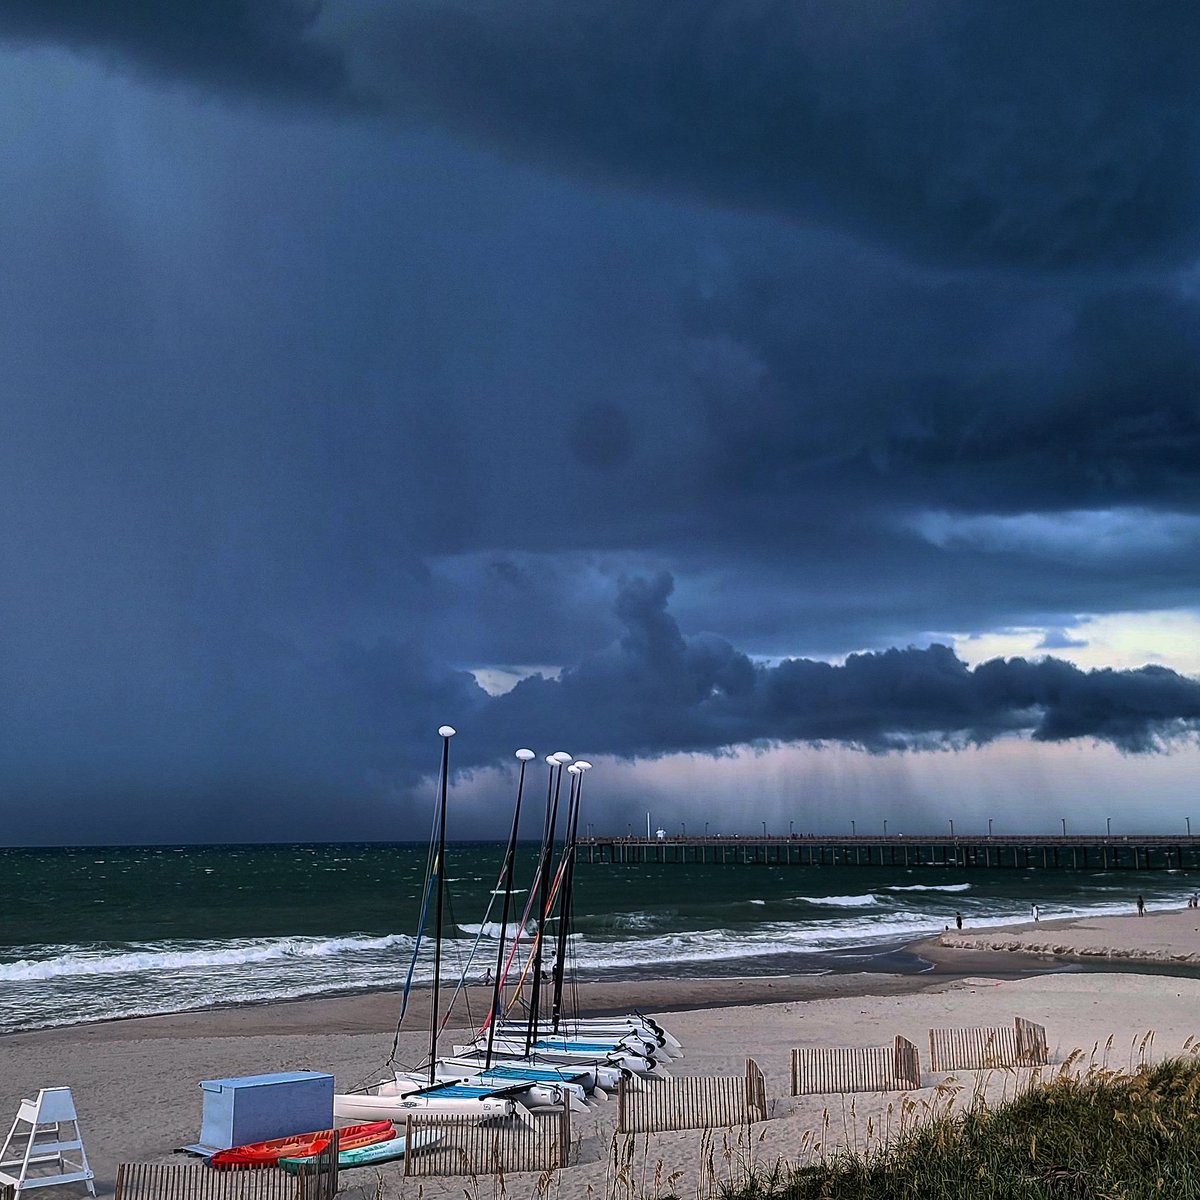 Storm moving into Myrtle Beach South Carolina this evening around 8 pm. #scwx #606stormchasers @AndrewWMBF @brobwx @cameronwymt @cjwxguy56 @ChrisHallWx @jloganwxguy @Kentuckyweather @SpencerWeather @thekyniche @wxchanneldesk